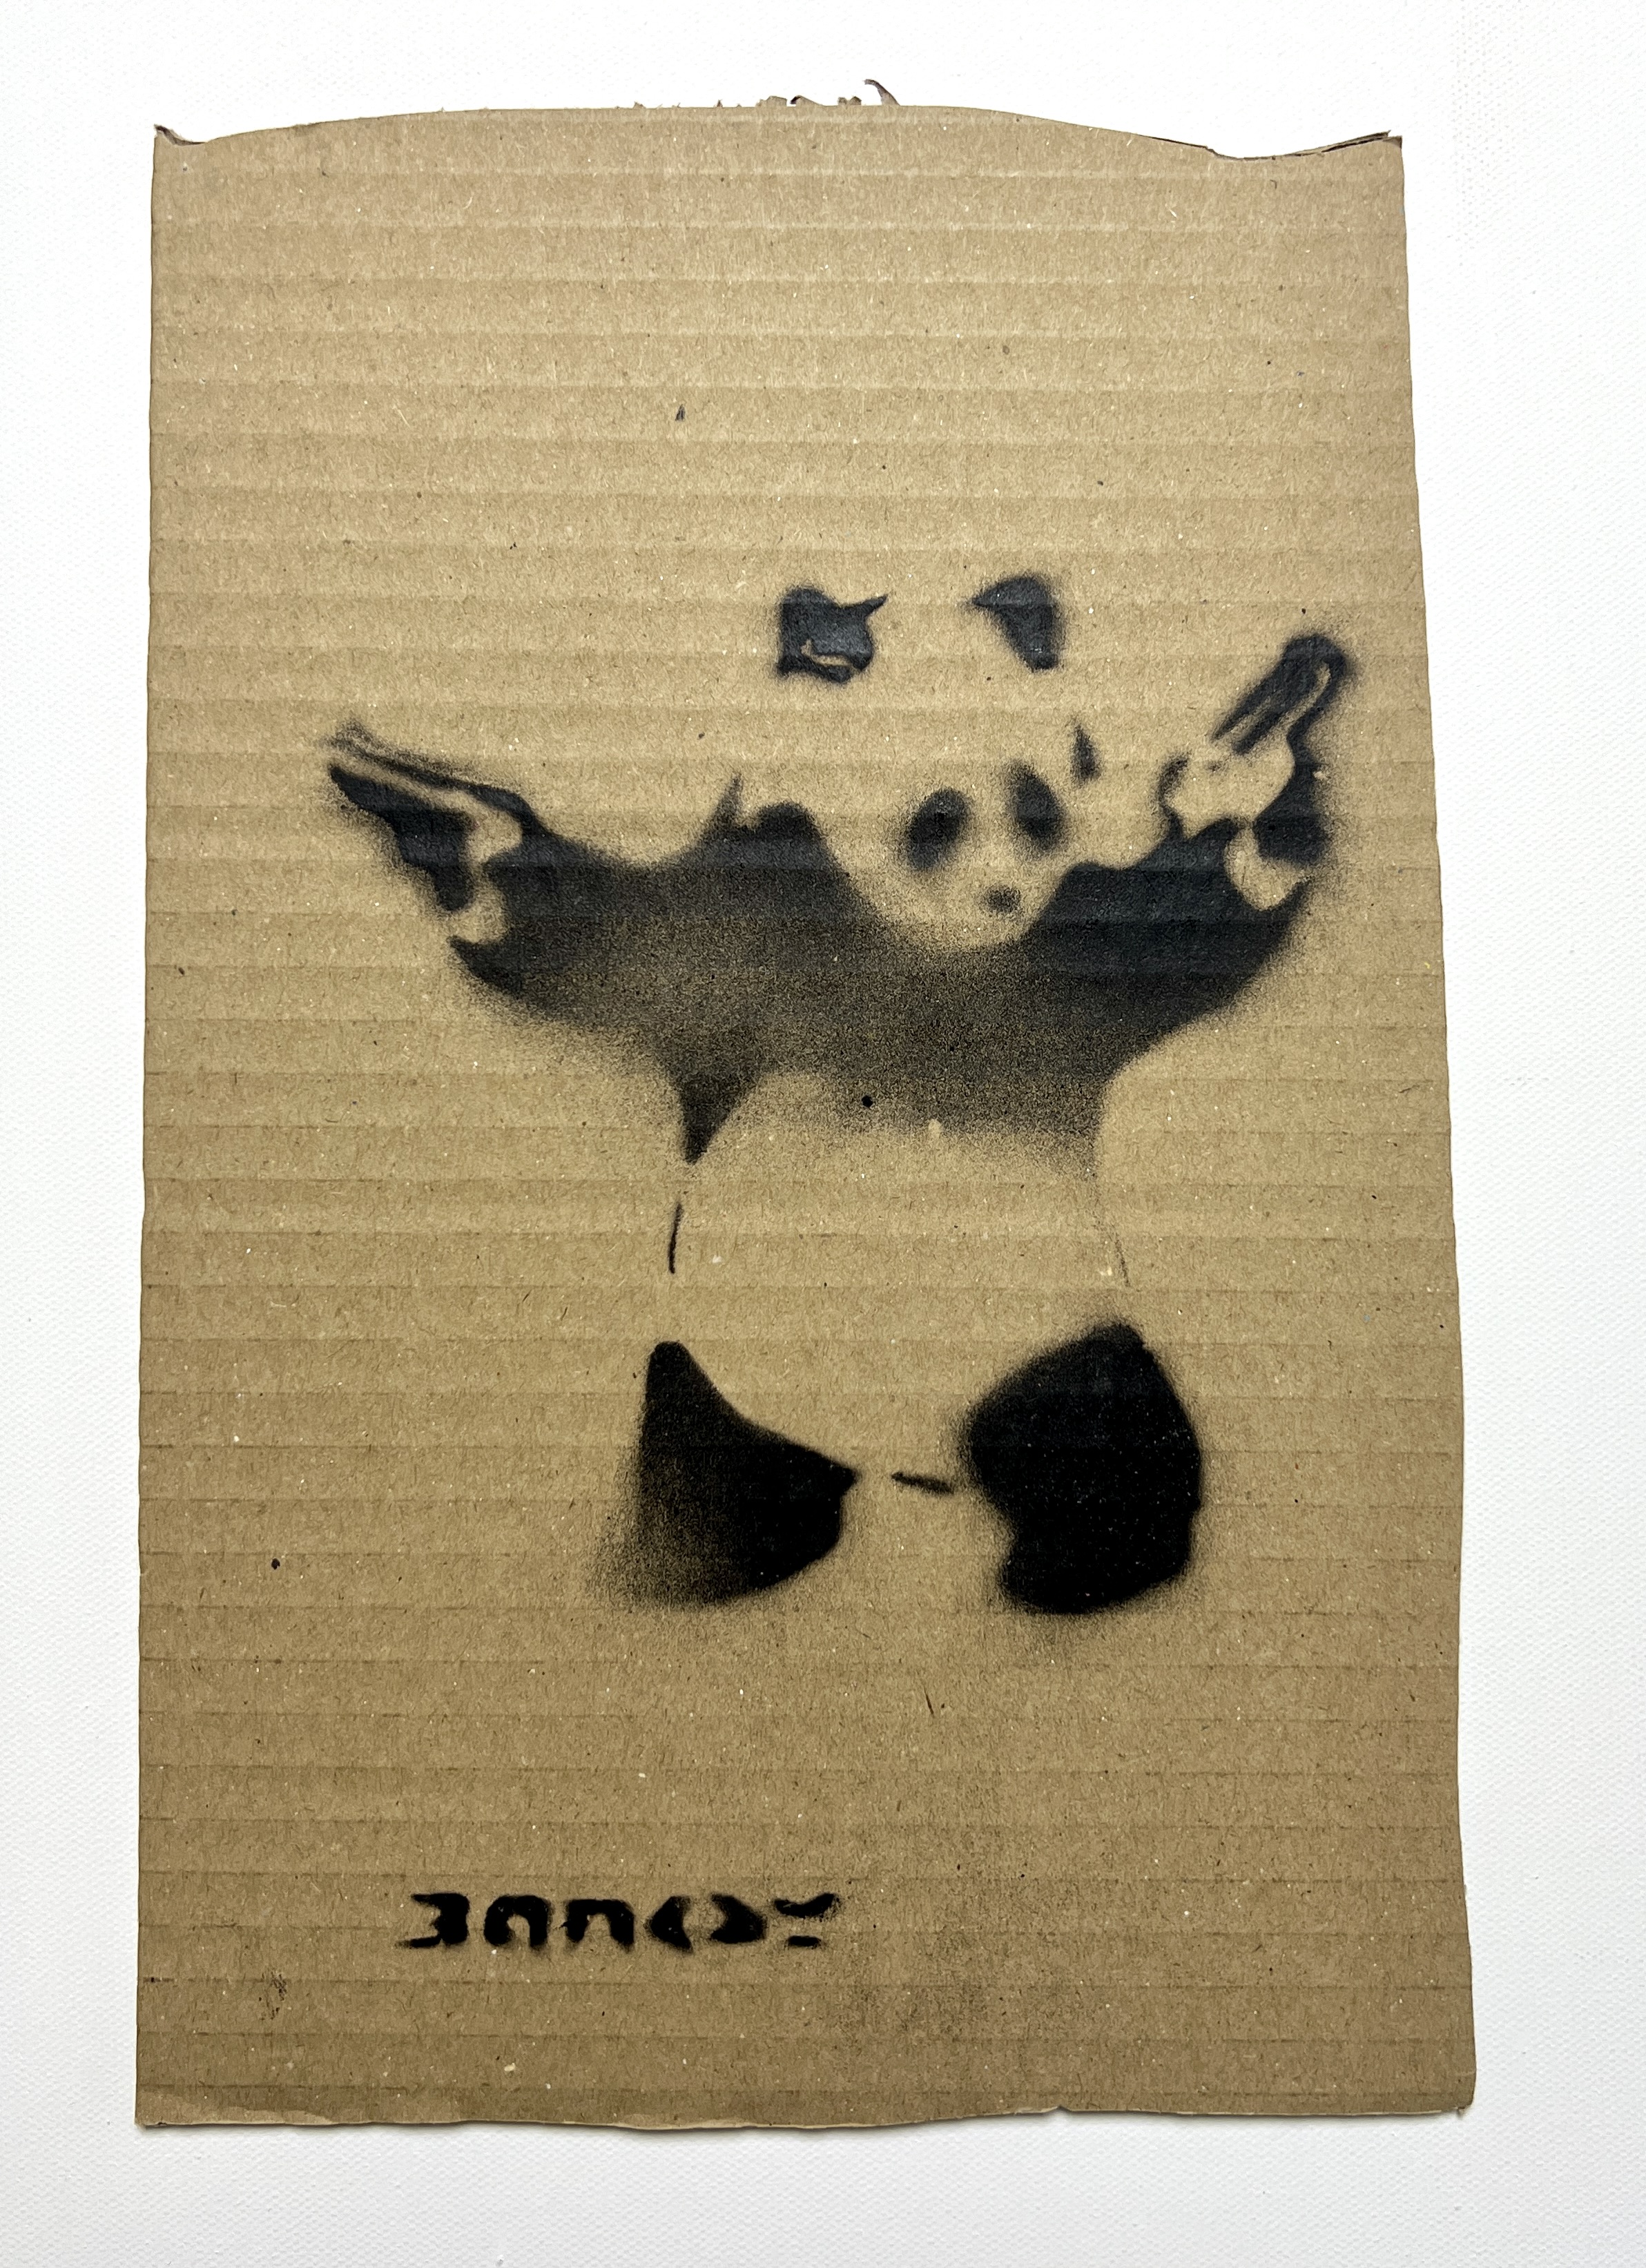 Banksy. â€œPanda Meanâ€. 2015. Spray paint and stencil on cardboard. Signed "Banksy" on the front i - Image 2 of 3